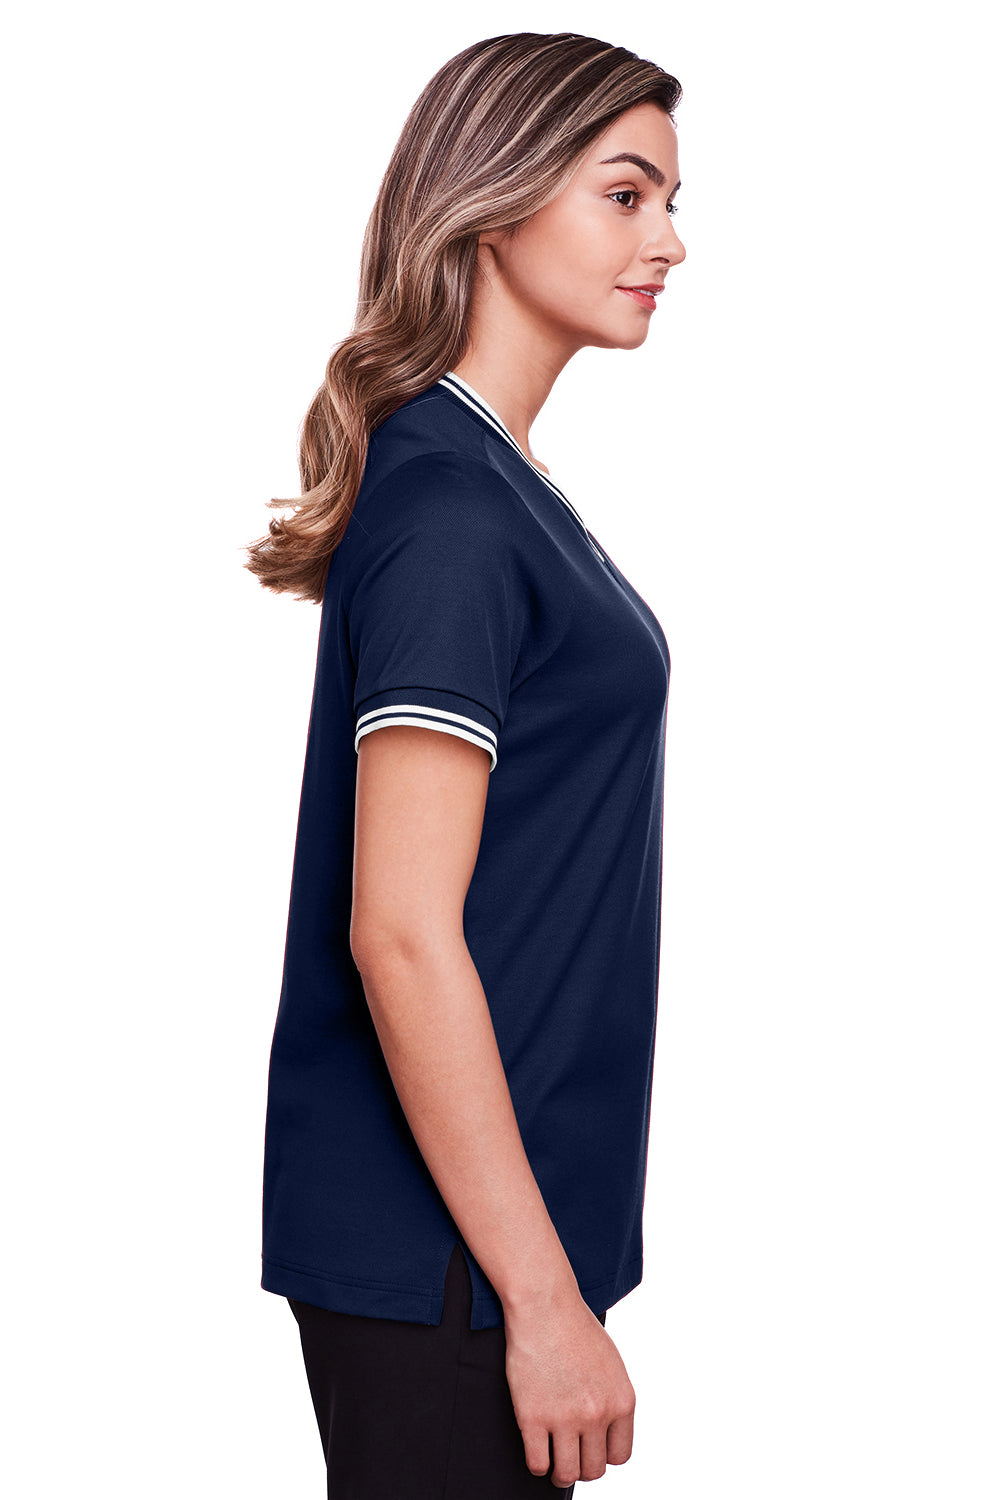 Devon & Jones DG20CW Womens CrownLux Performance Moisture Wicking Short Sleeve Polo Shirt Navy Blue/White Side